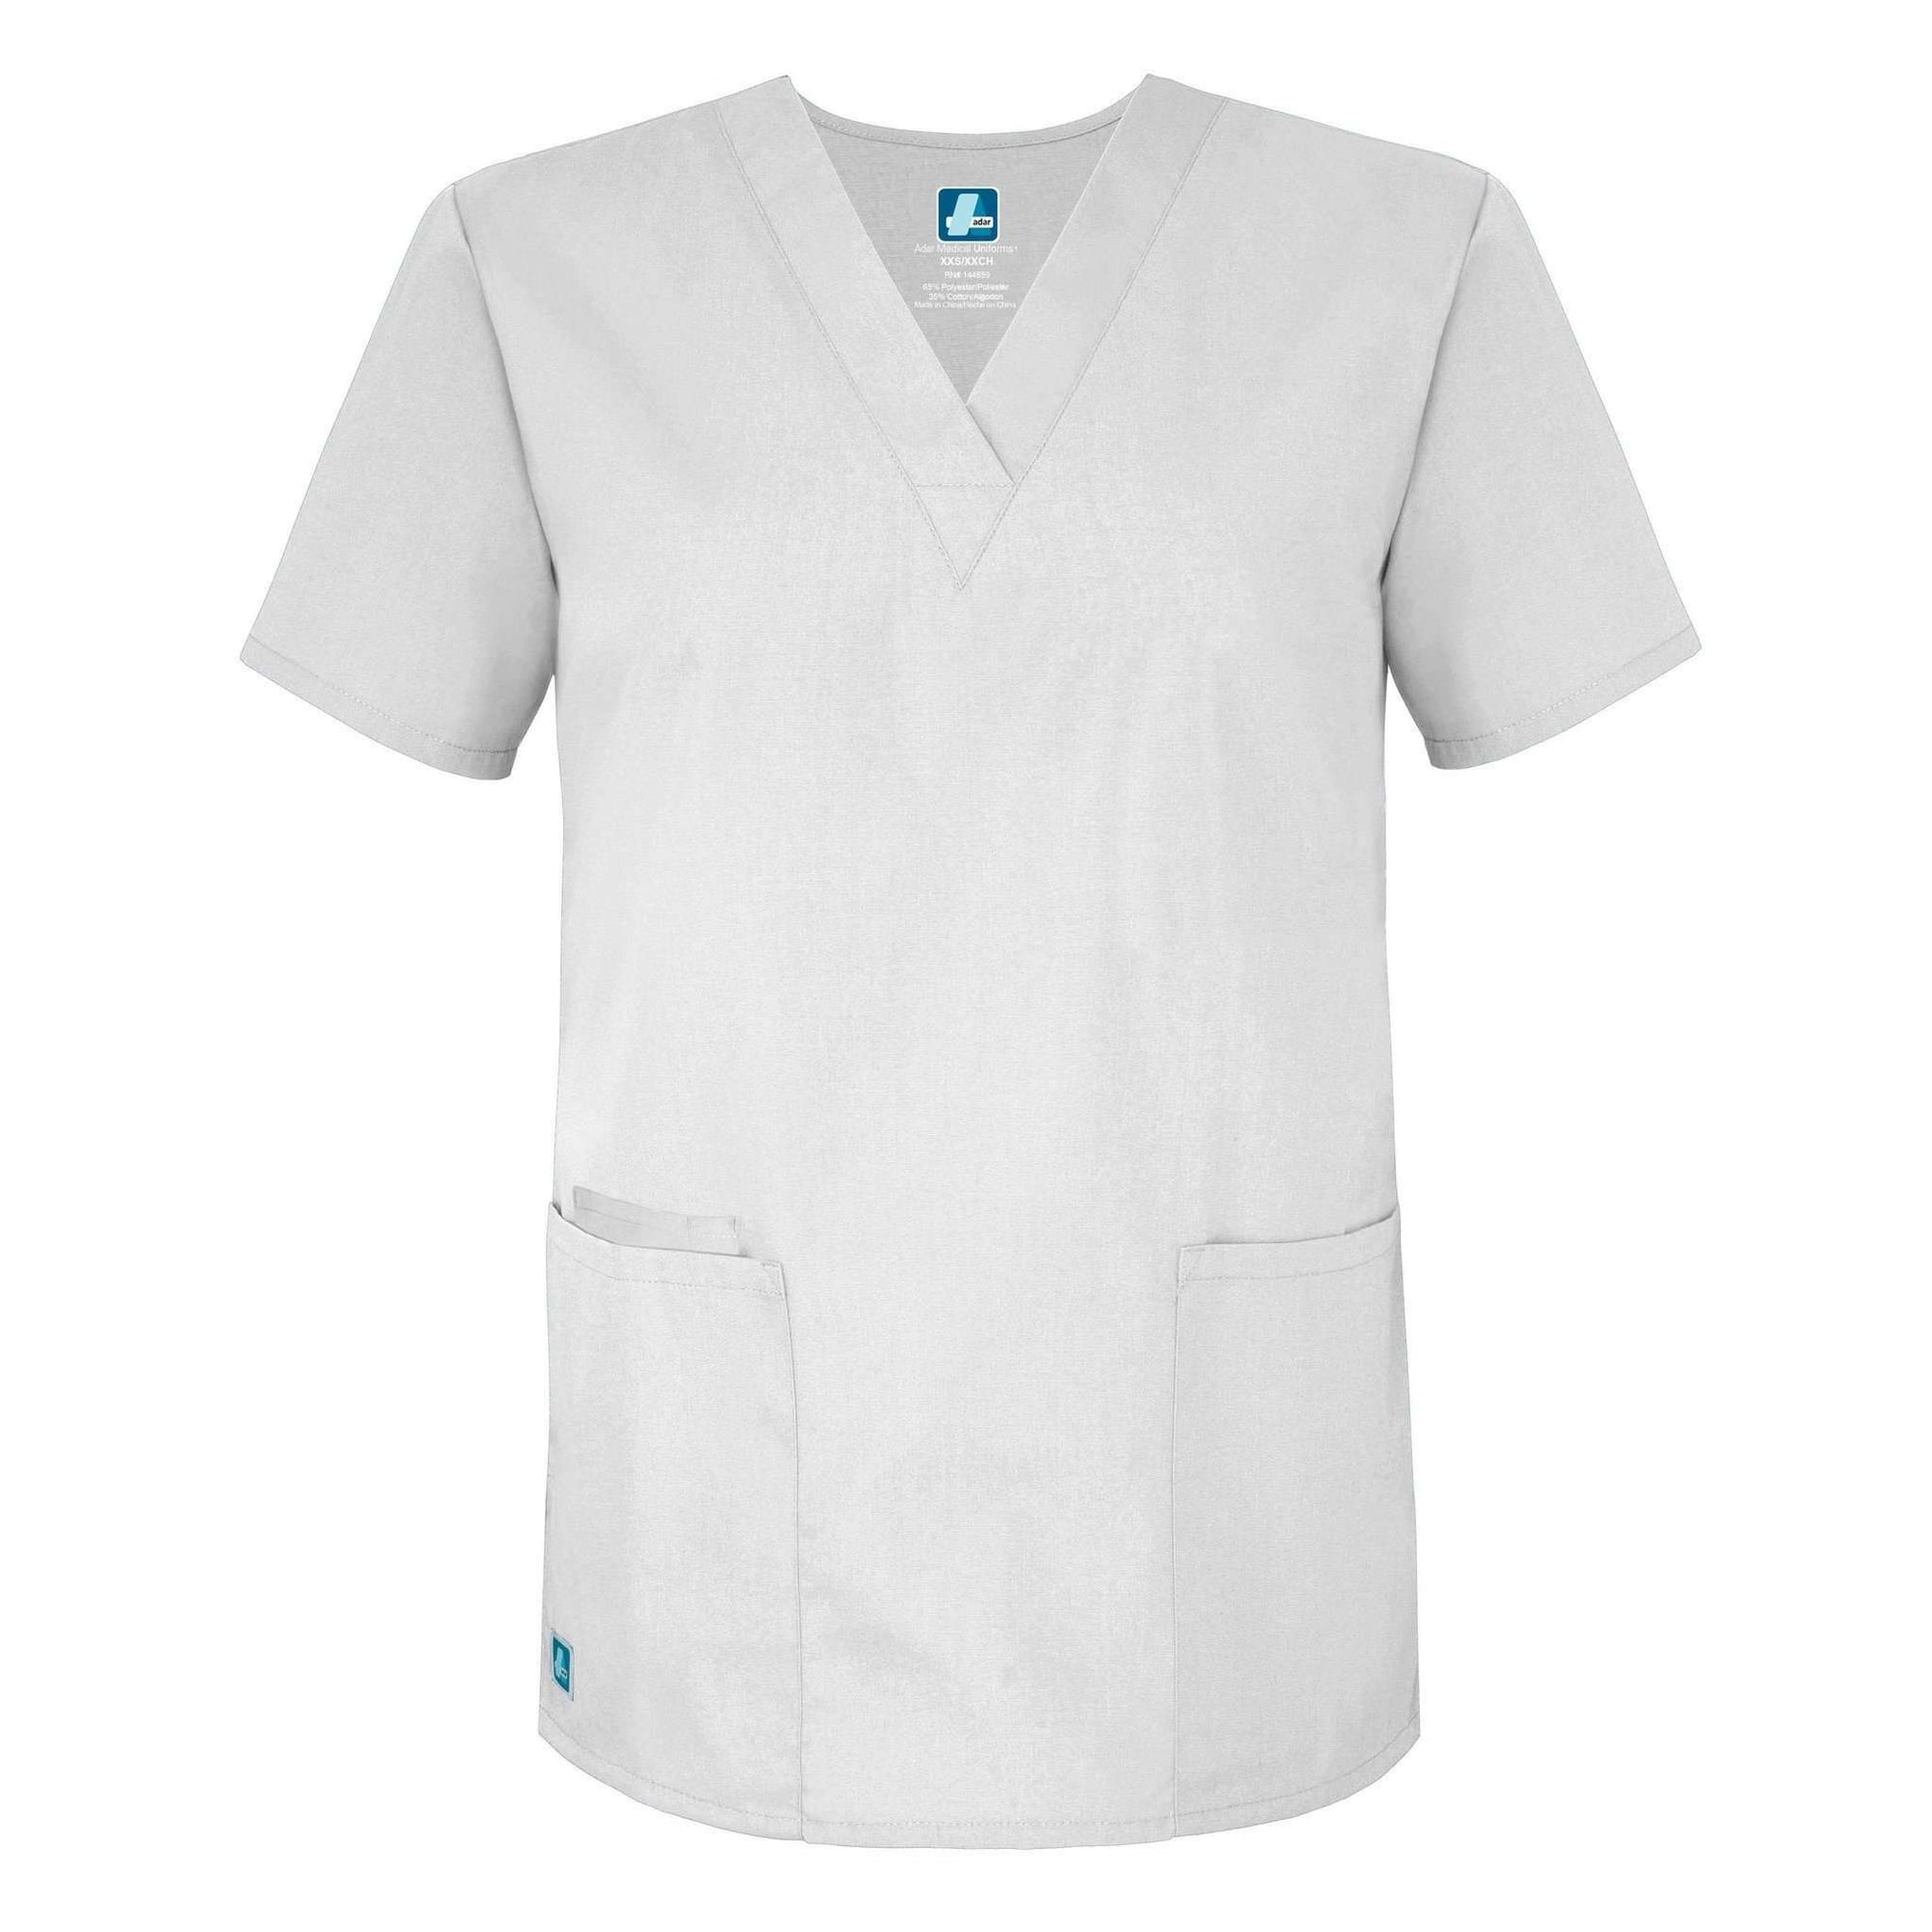  Adar - uniforms Medical Uniform Tops uniforms online Adar Universal Unisex V-Neck 2 Pocket Scrub Top White S - SchoolUniforms.com